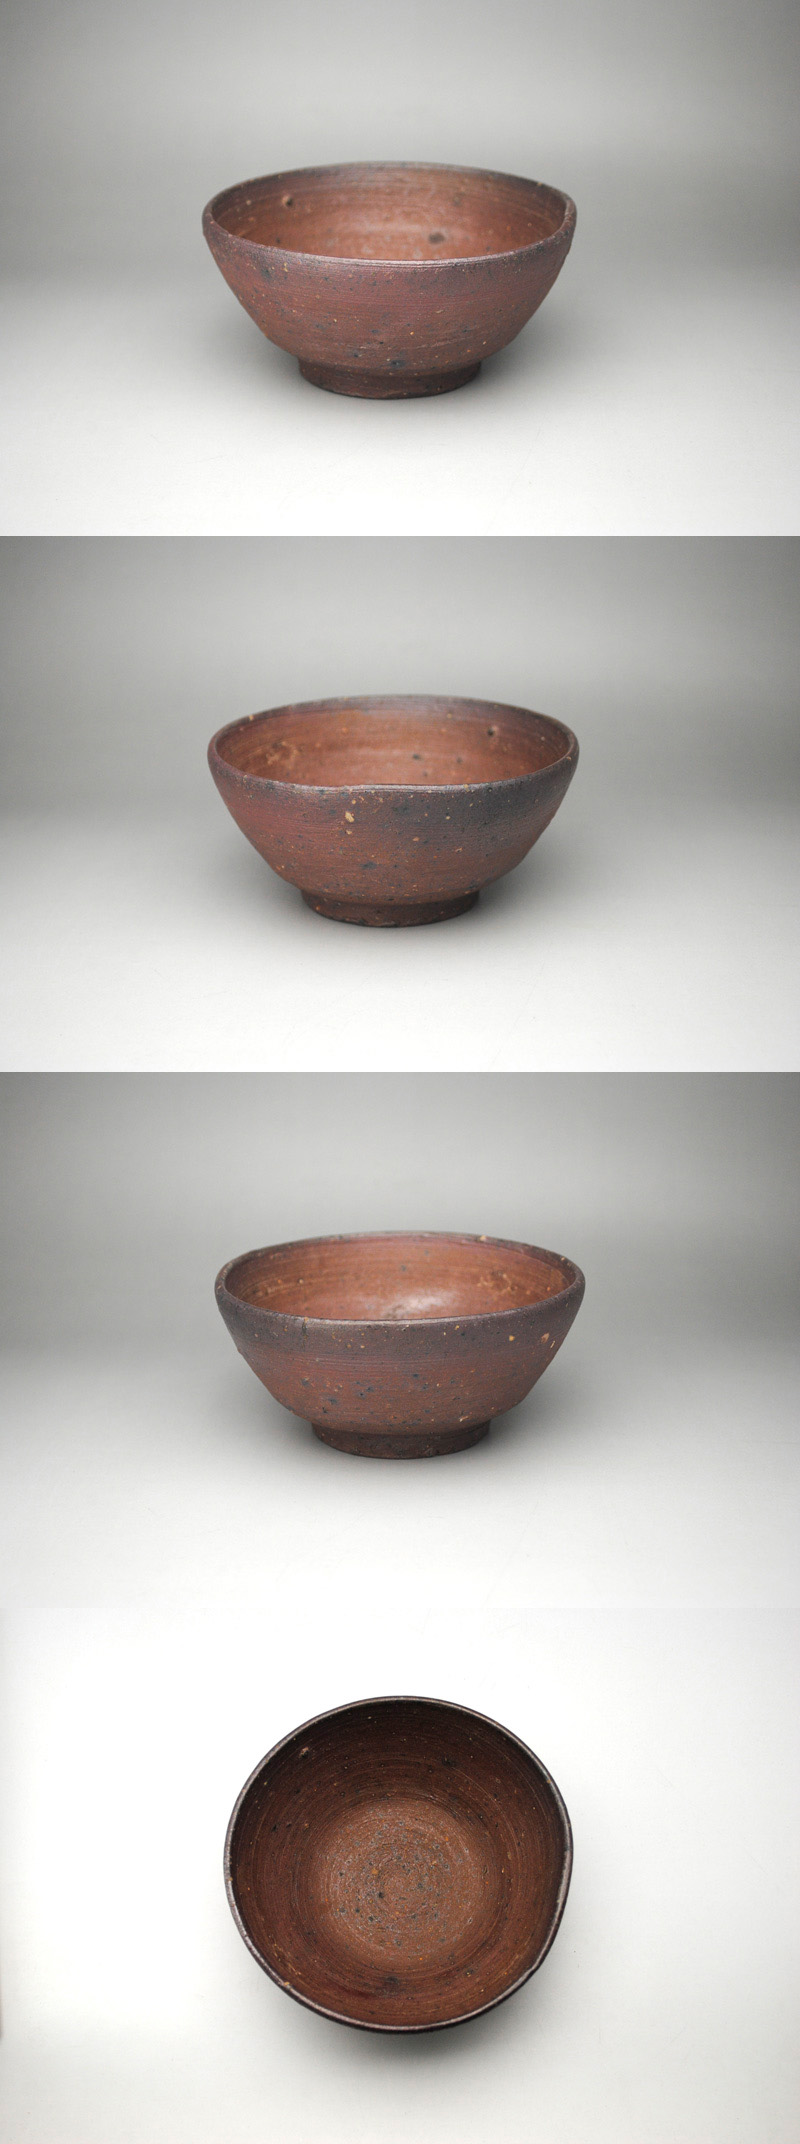 中上 ///NAKAGAMI - 古備前茶碗 | 古美術品専門サイト fufufufu.com